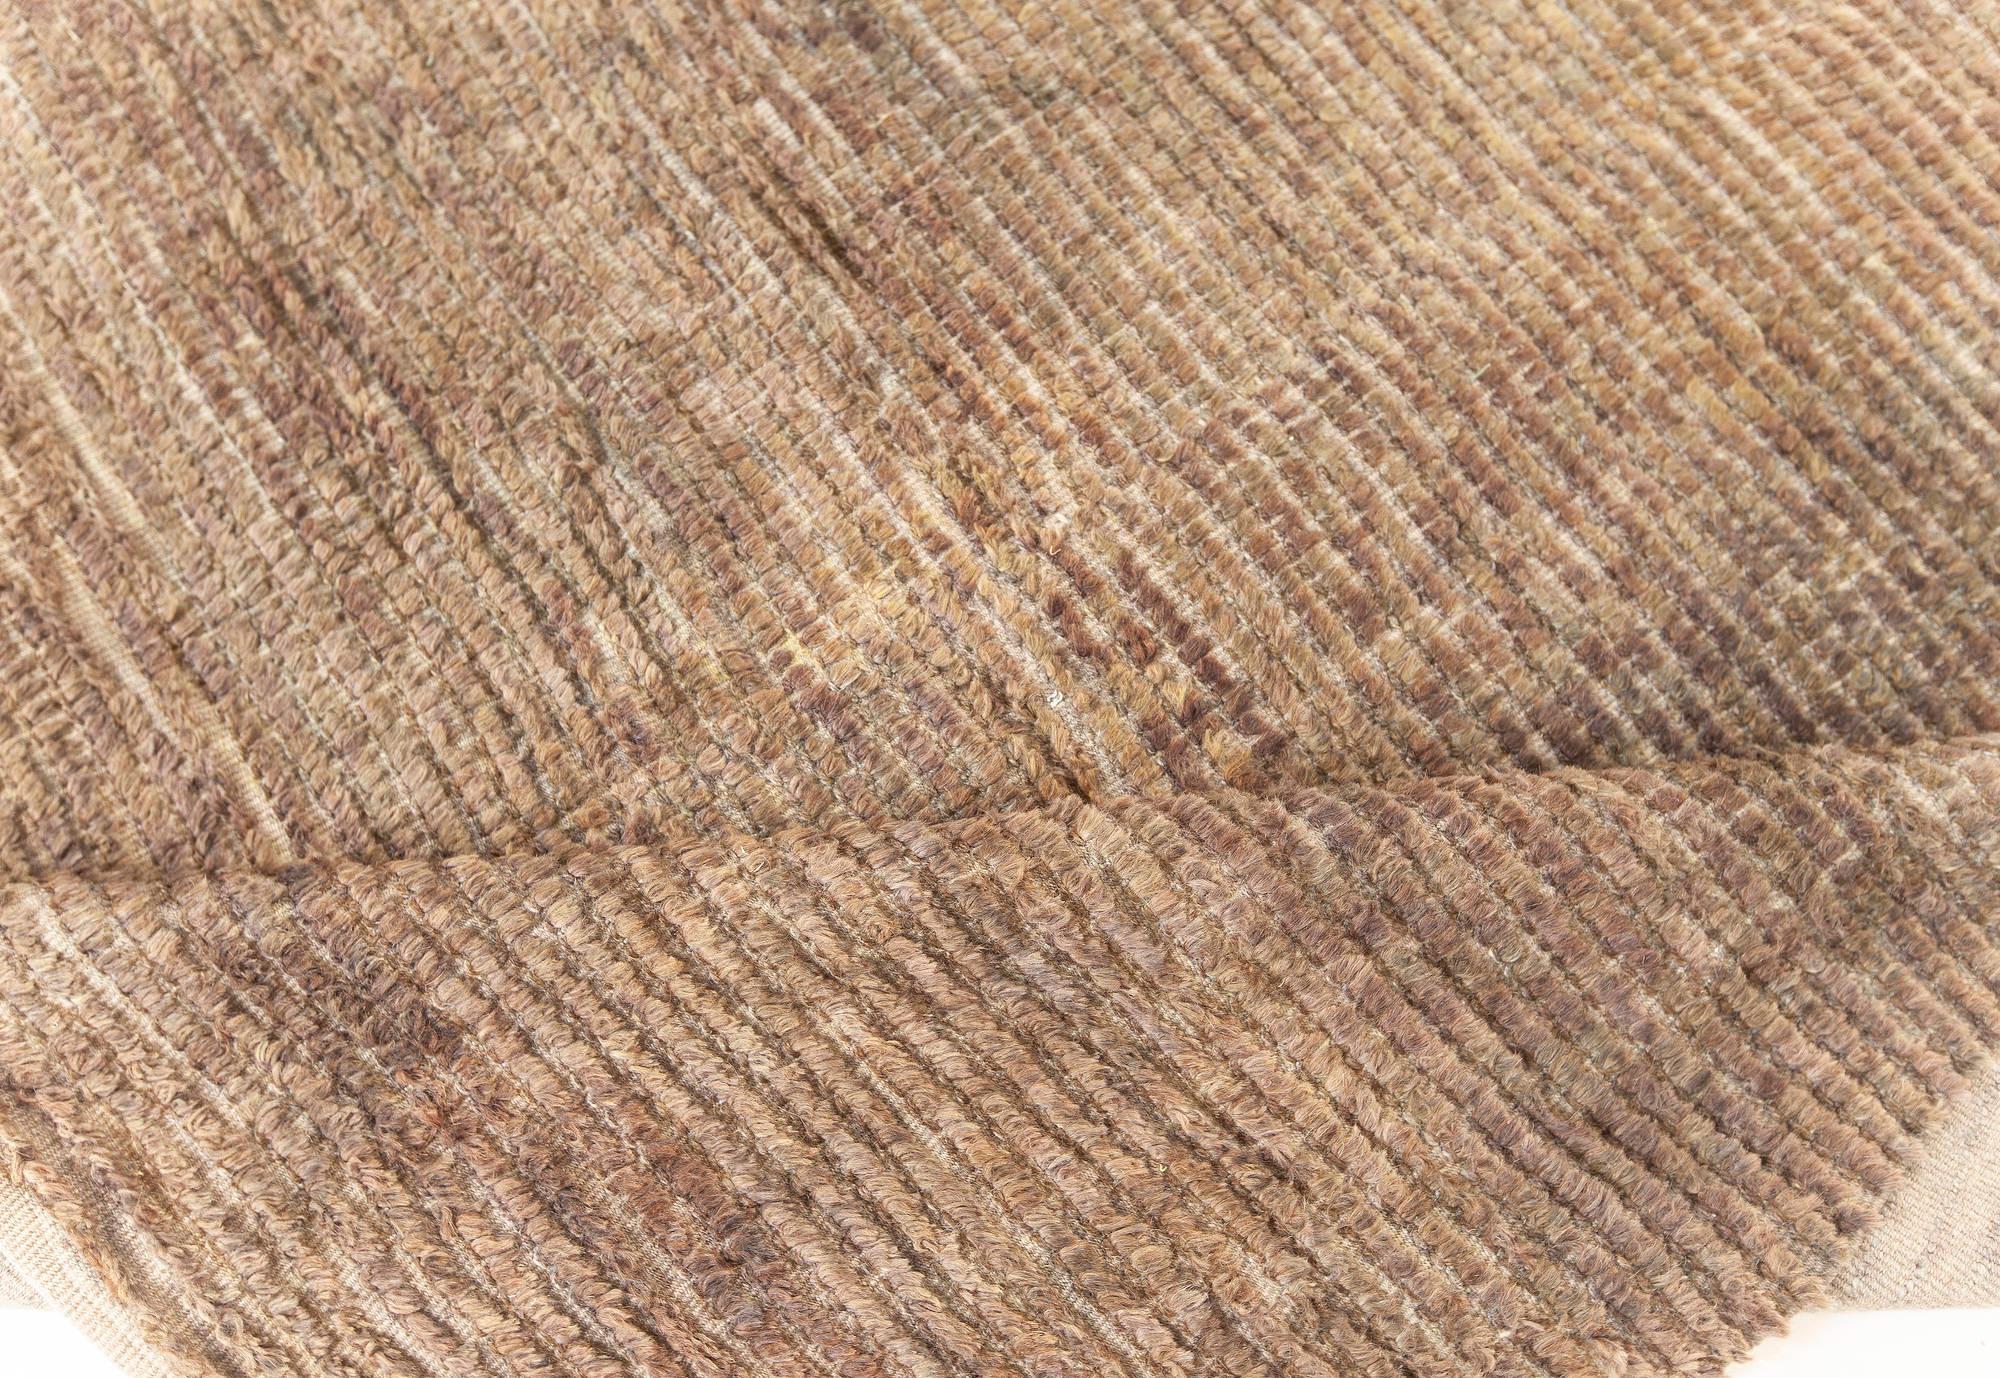 Modern Textural Marsh rug in Neutral colors by Doris Leslie Blau.
Size: 10'7